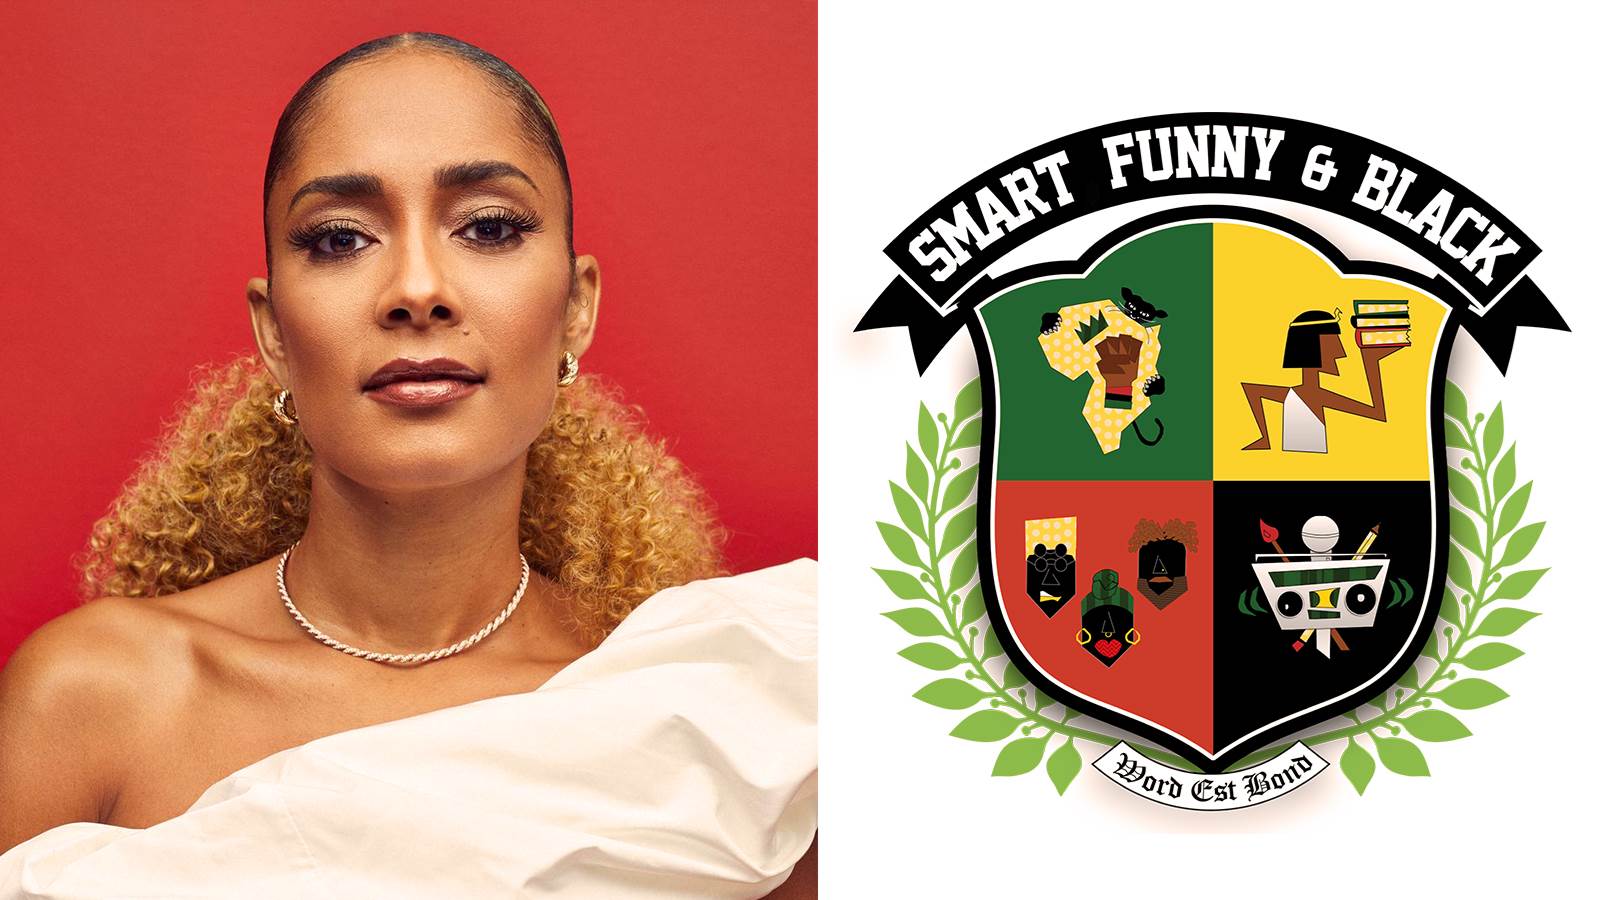 Smart Funny & Black | Kennedy Center